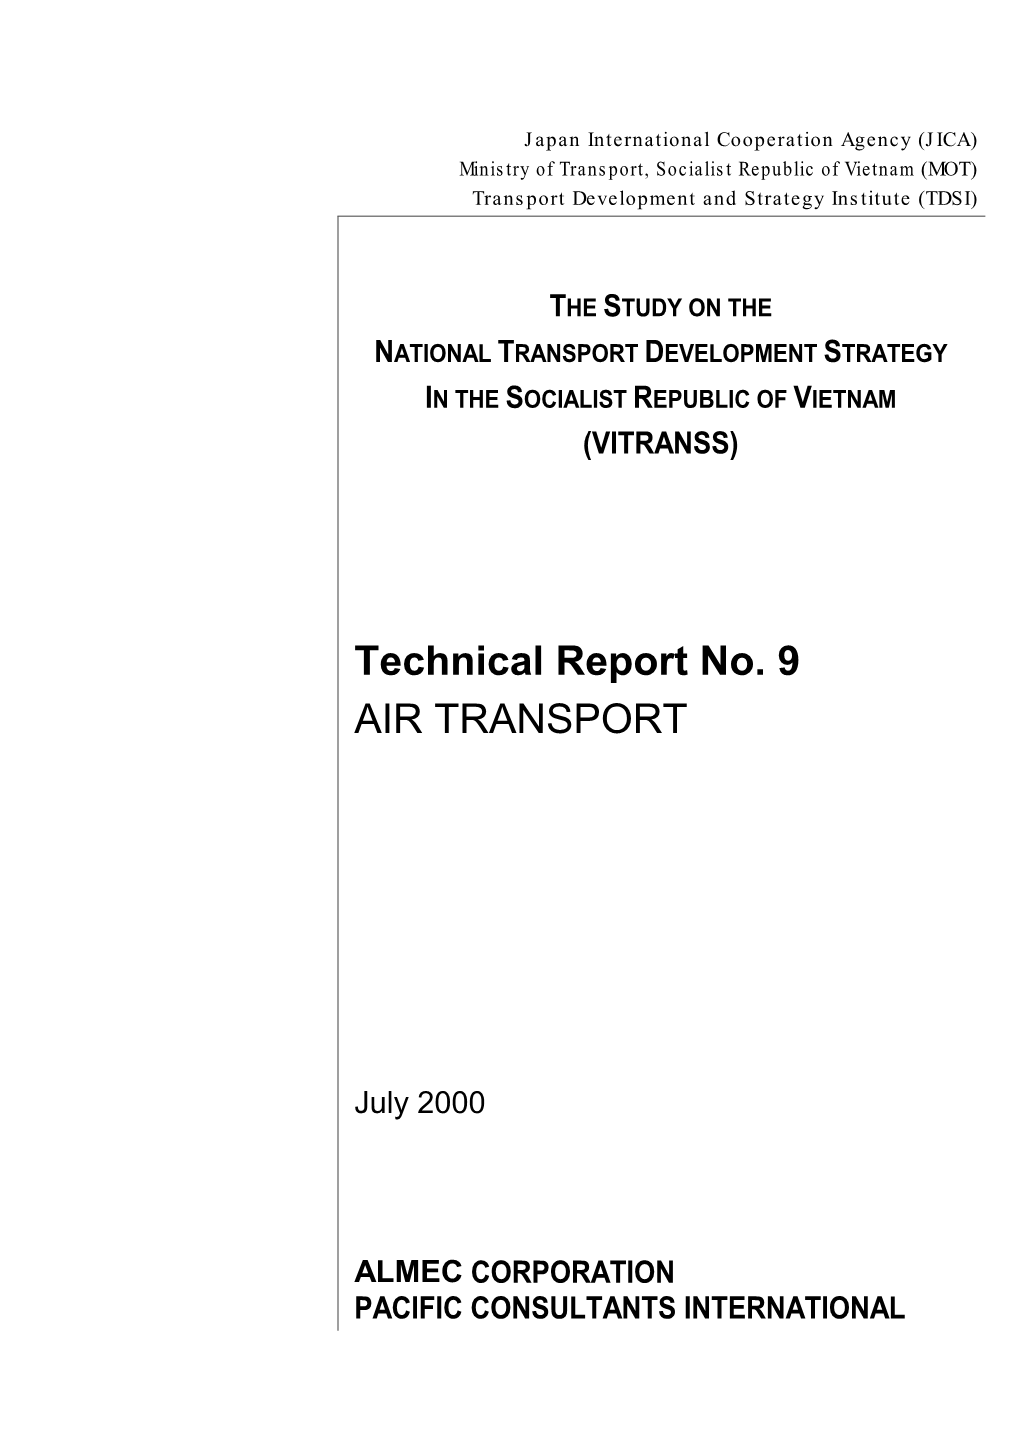 Technical Report No. 9 AIR TRANSPORT